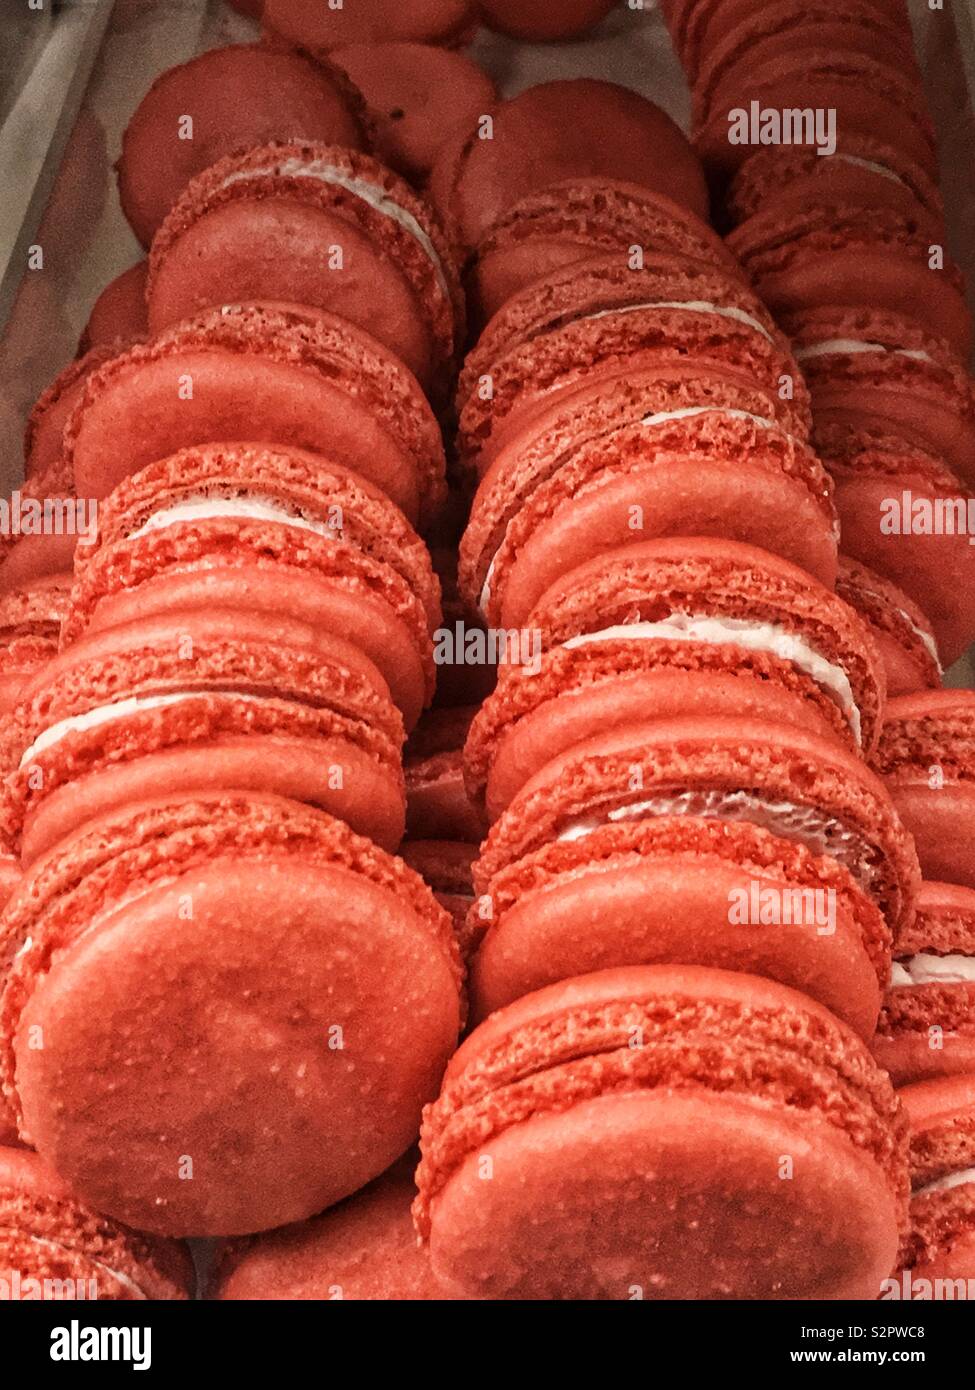 Fresh delicious pink macaron sandwich cookies. Stock Photo